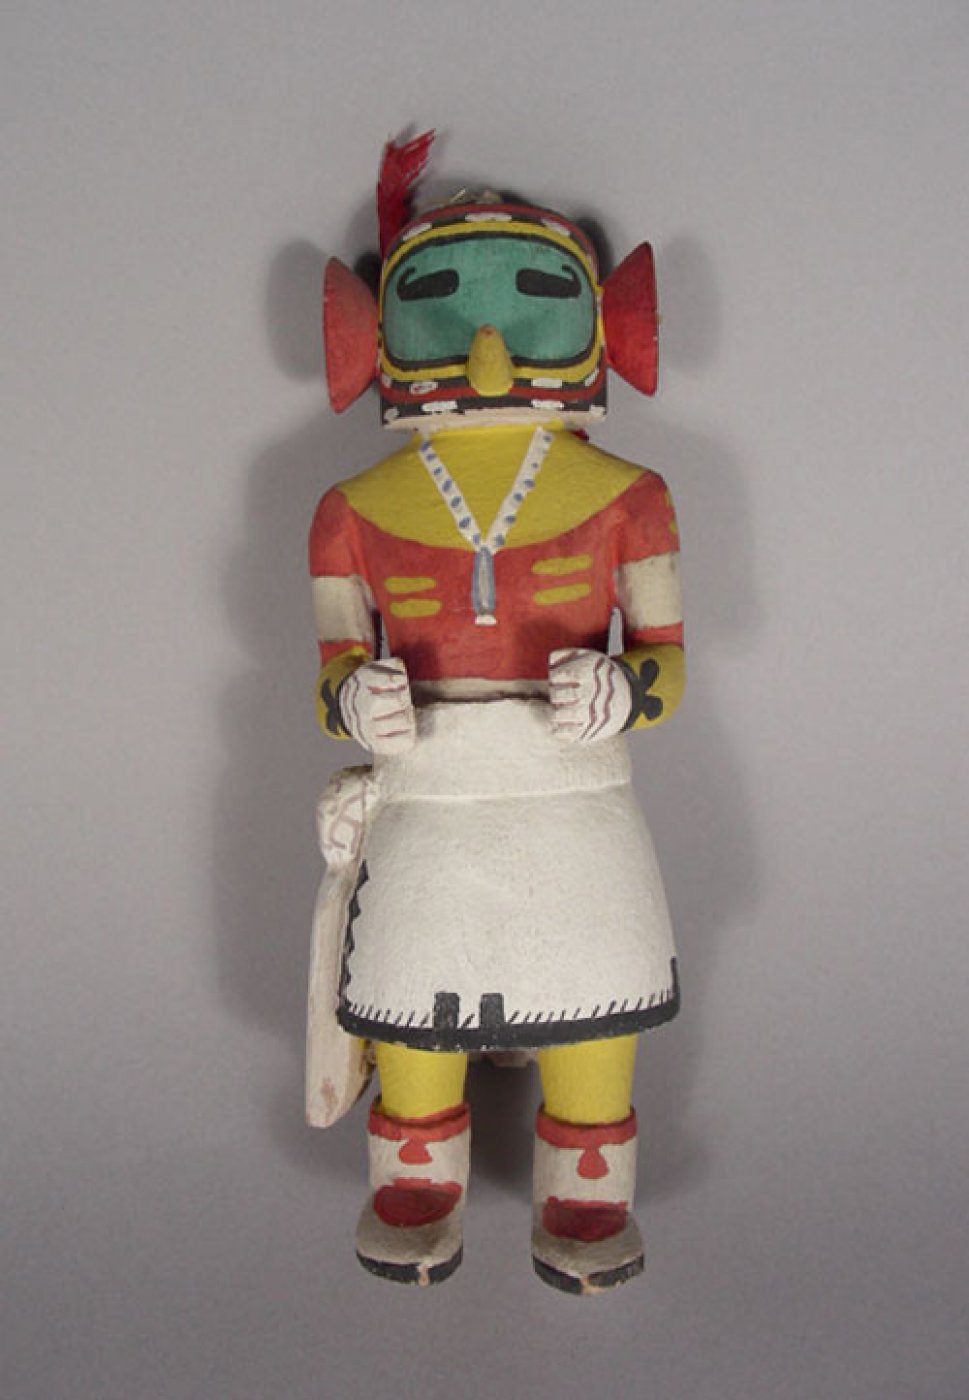 Kika Doll or Brown Pepa Chulapa, Famous Nancy Mold RESERVED 